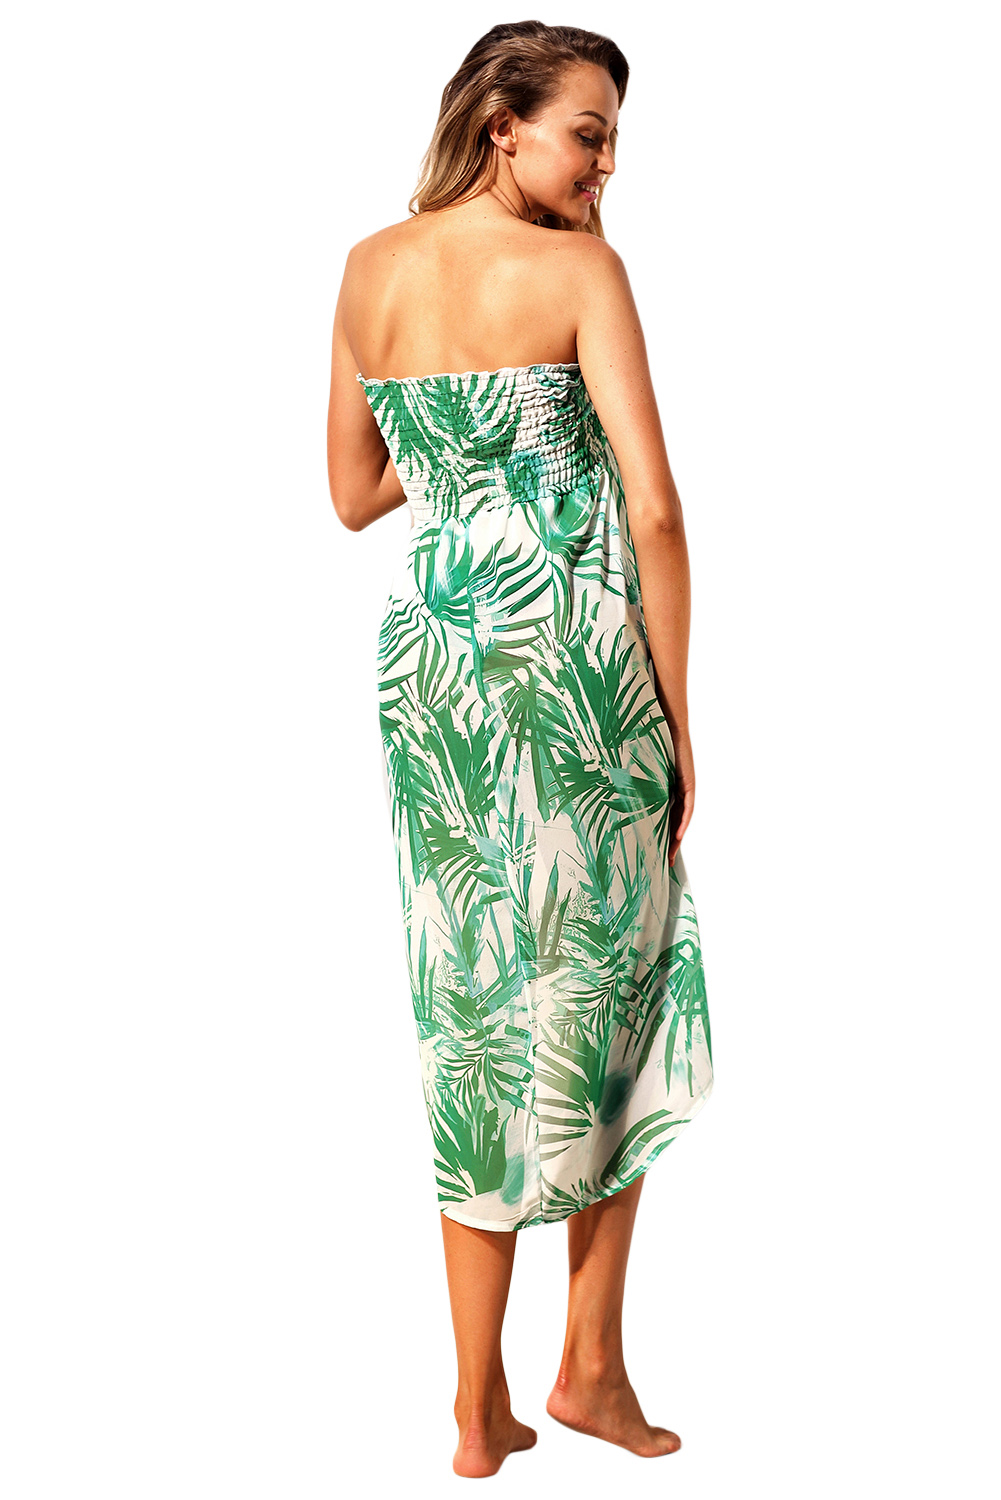 BY42278-9 Tropical Leaf Print White Convertible Beach Dress